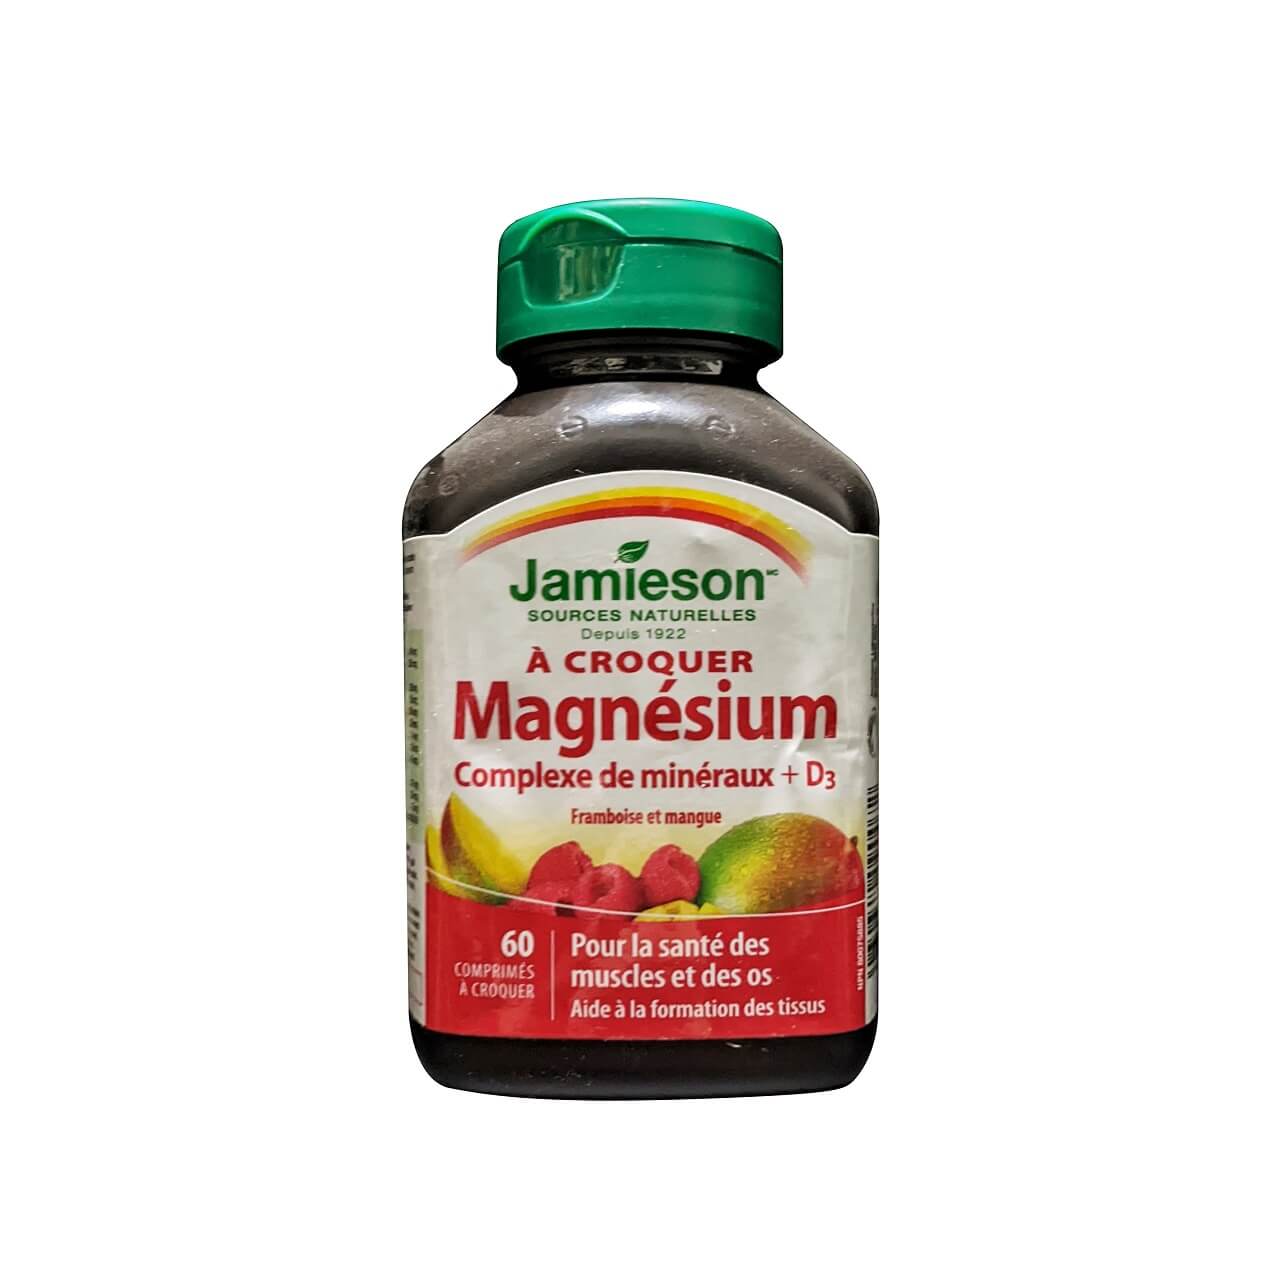 Jamieson Magnesium Mineral Complex + Vitamin D3 Chewables Raspberry Mango (60 chewables)